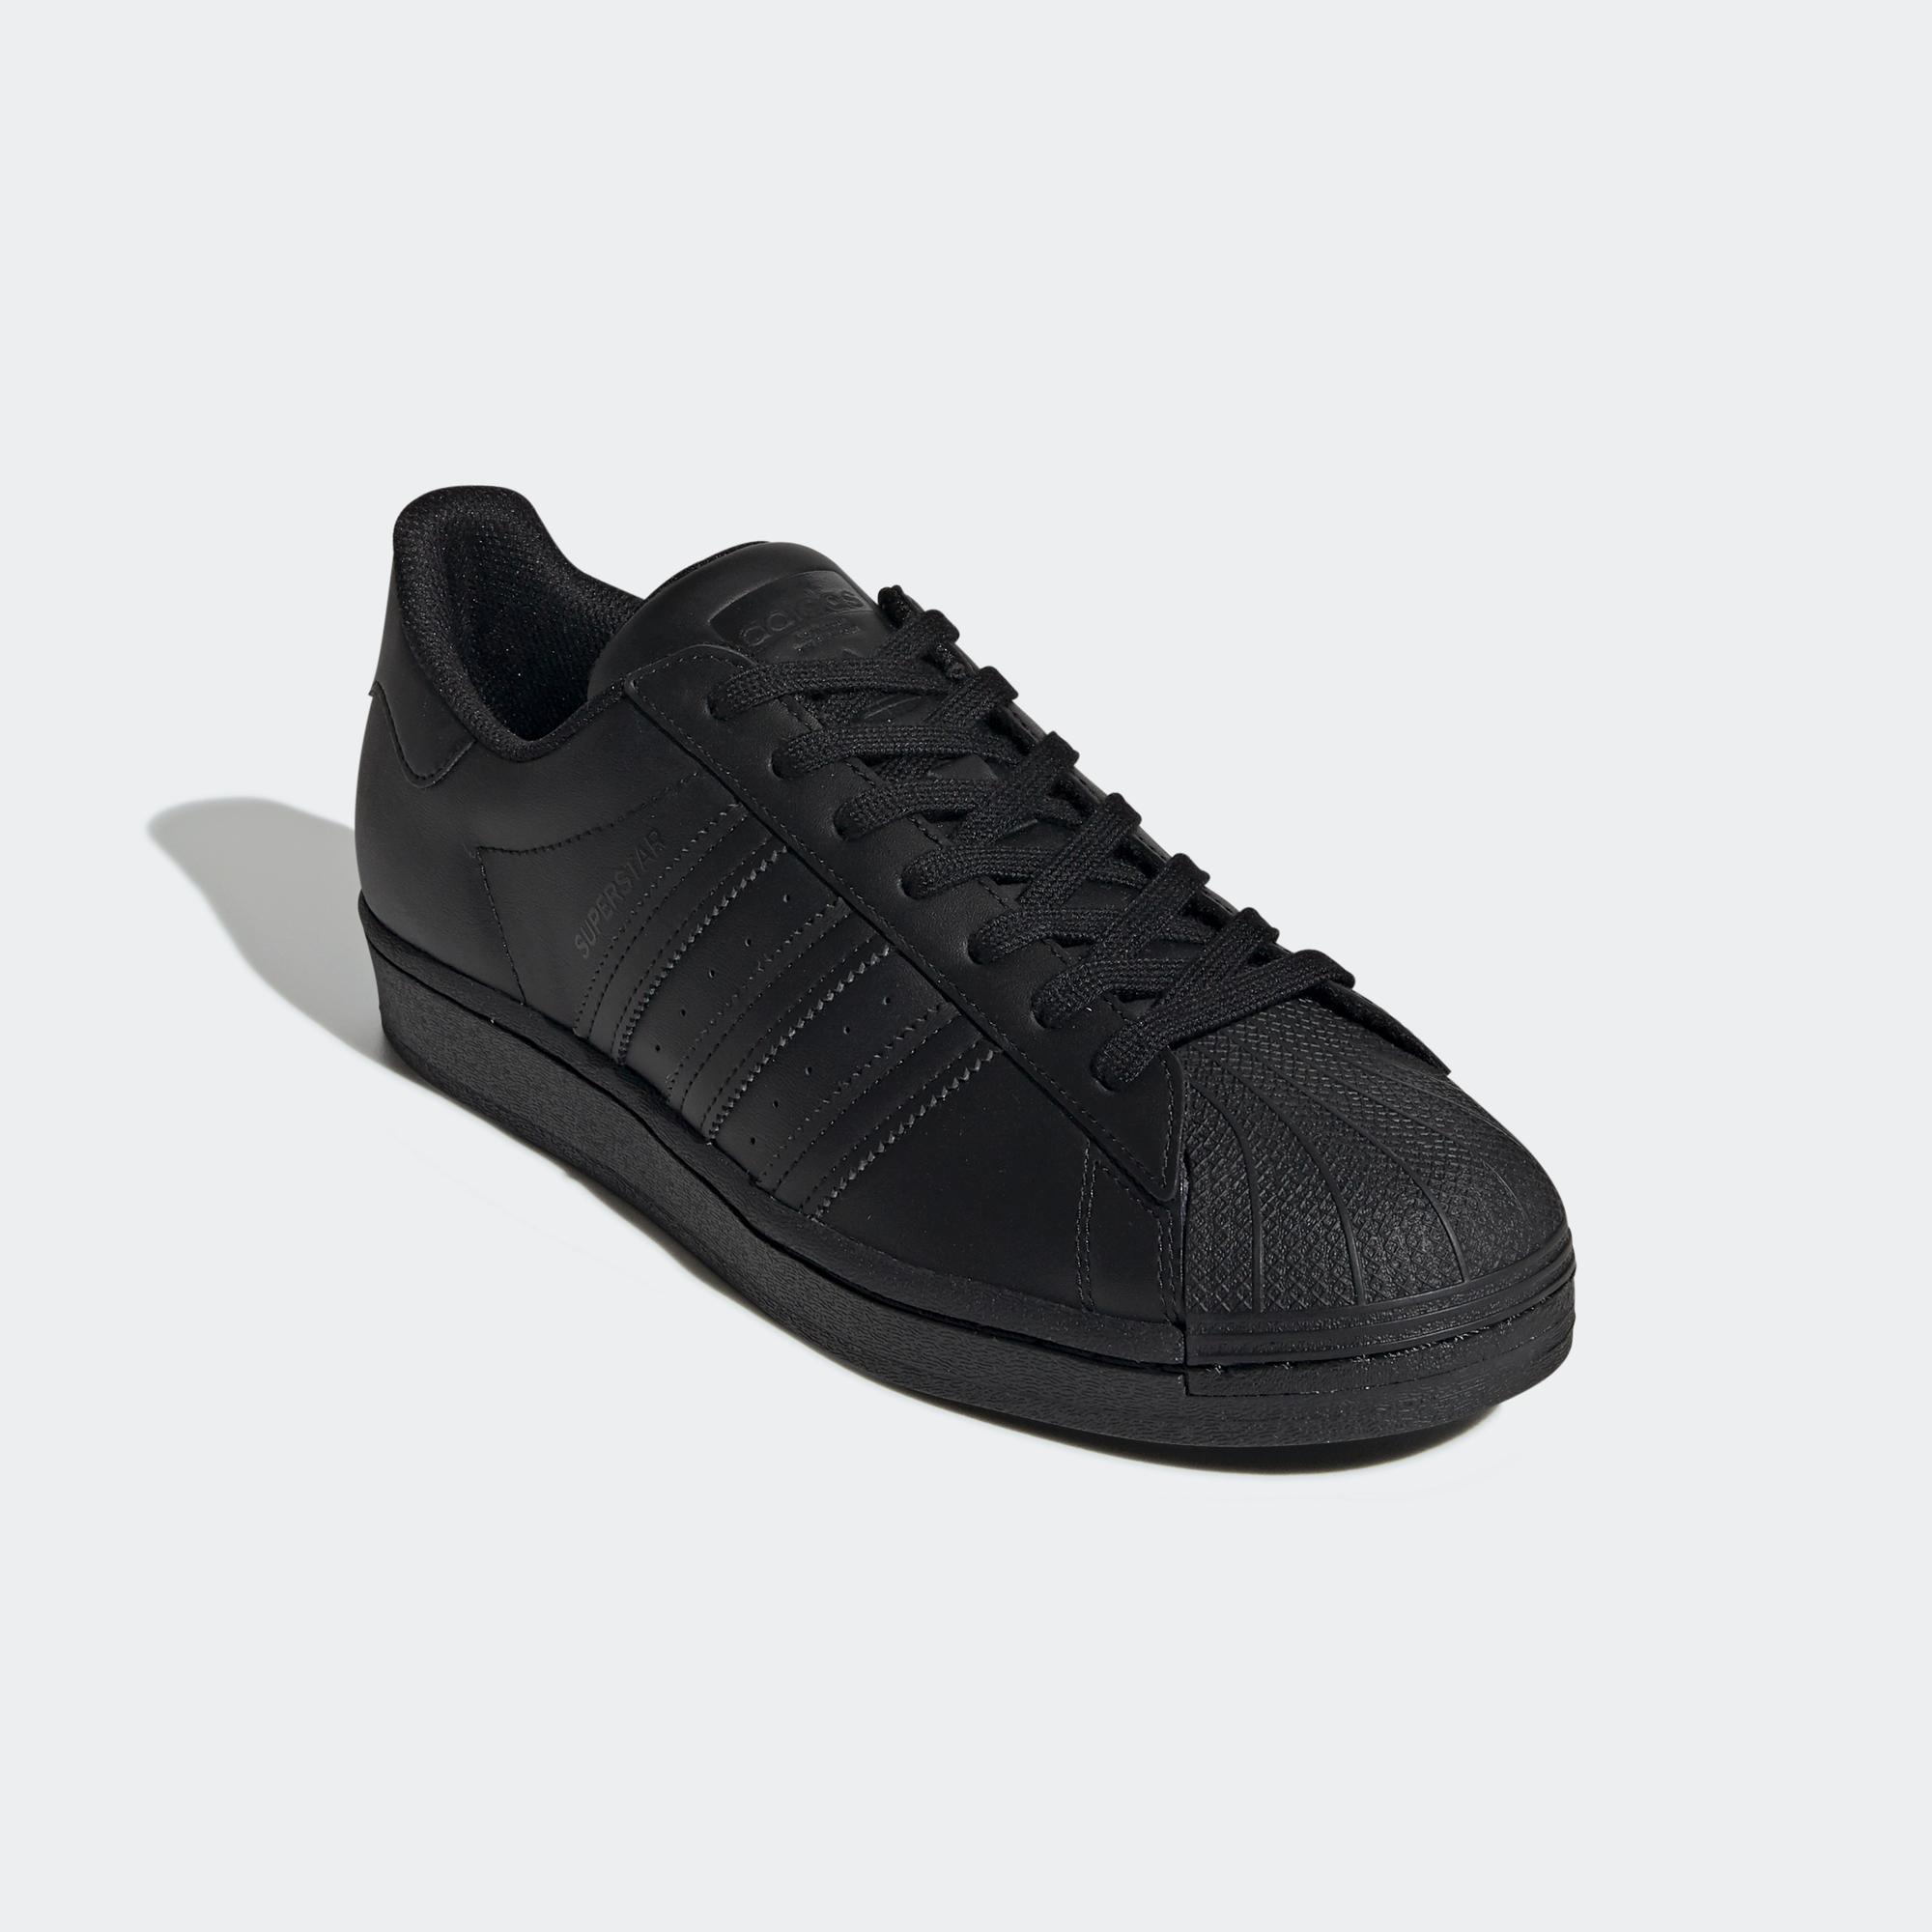 SUPERSTAR 運動鞋- 黑色| 女子,男子| adidas(愛迪達)香港官方網上商店